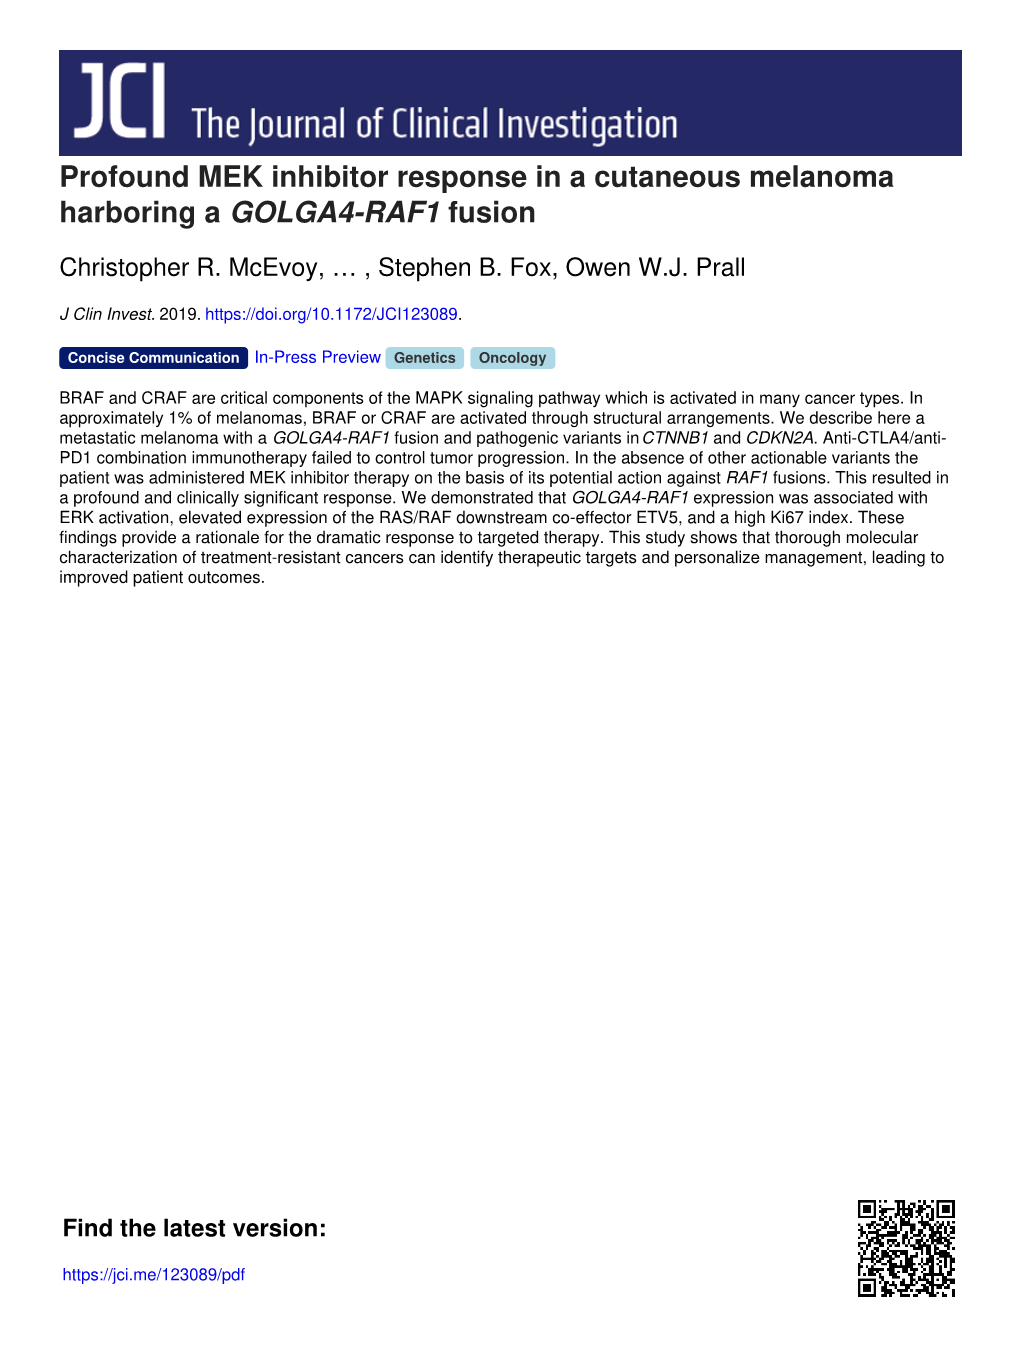 Profound MEK Inhibitor Response in a Cutaneous Melanoma Harboring a GOLGA4-RAF1 Fusion